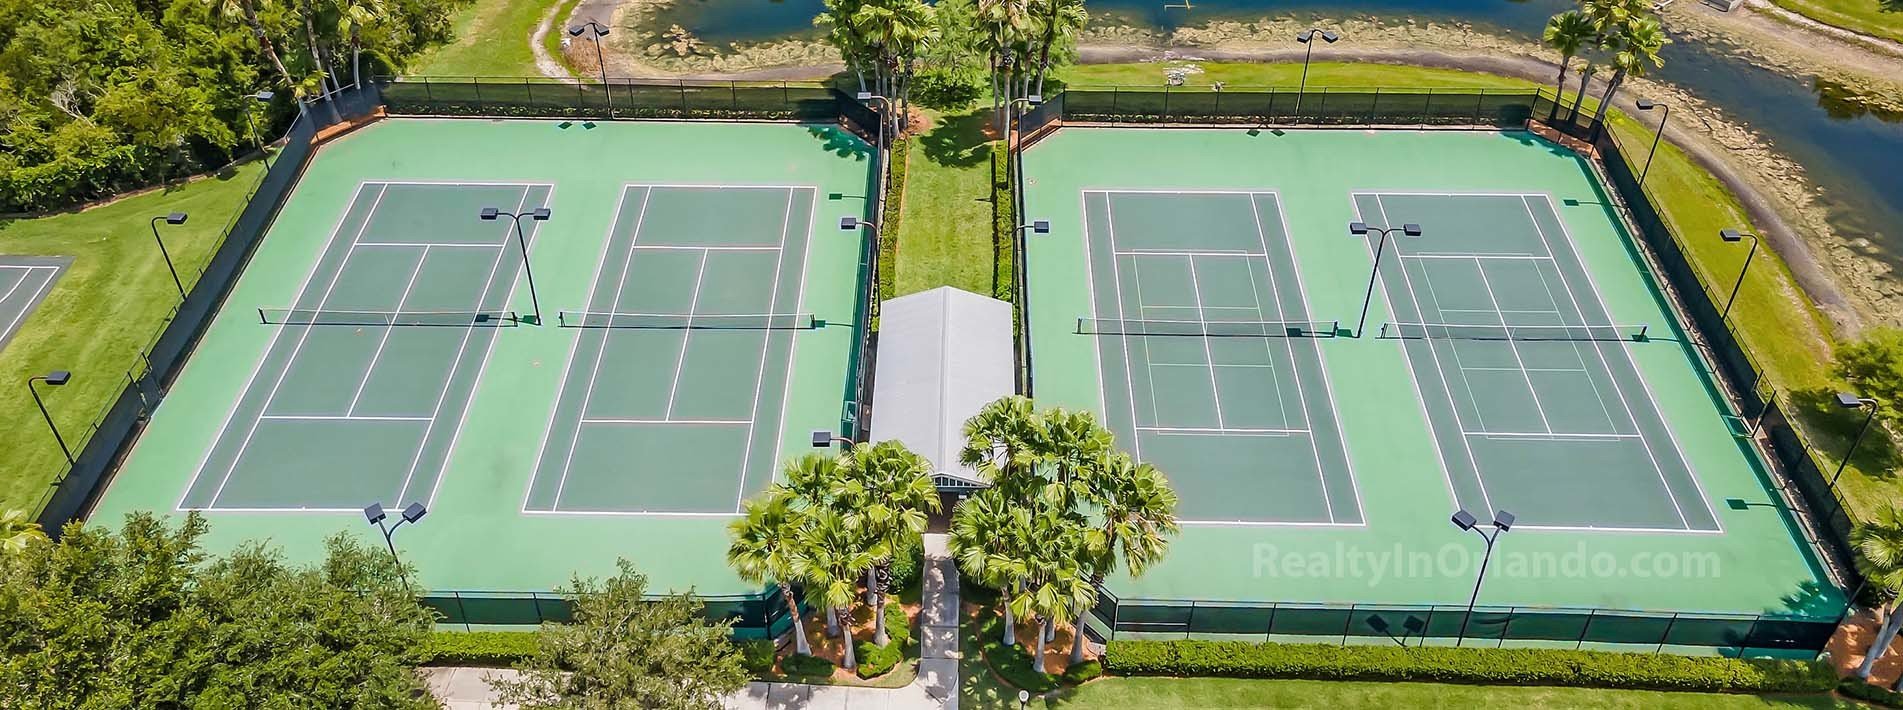 Avalon Park Tennis Court